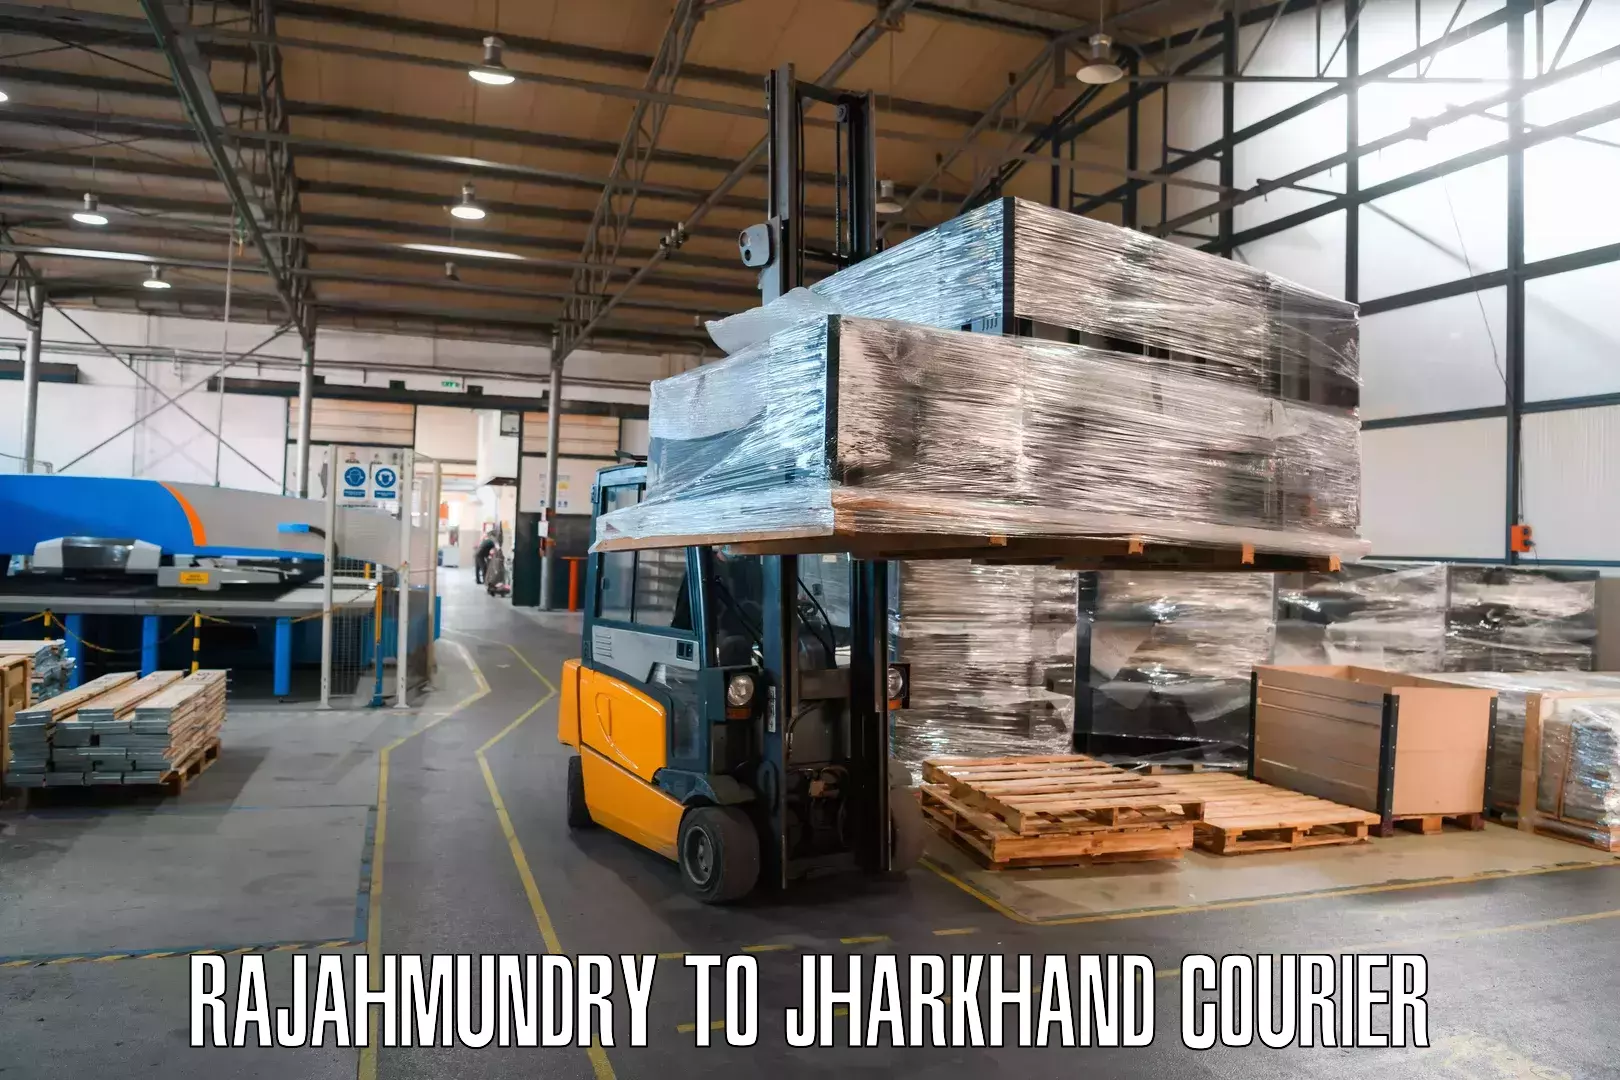 High-priority parcel service Rajahmundry to Doranda